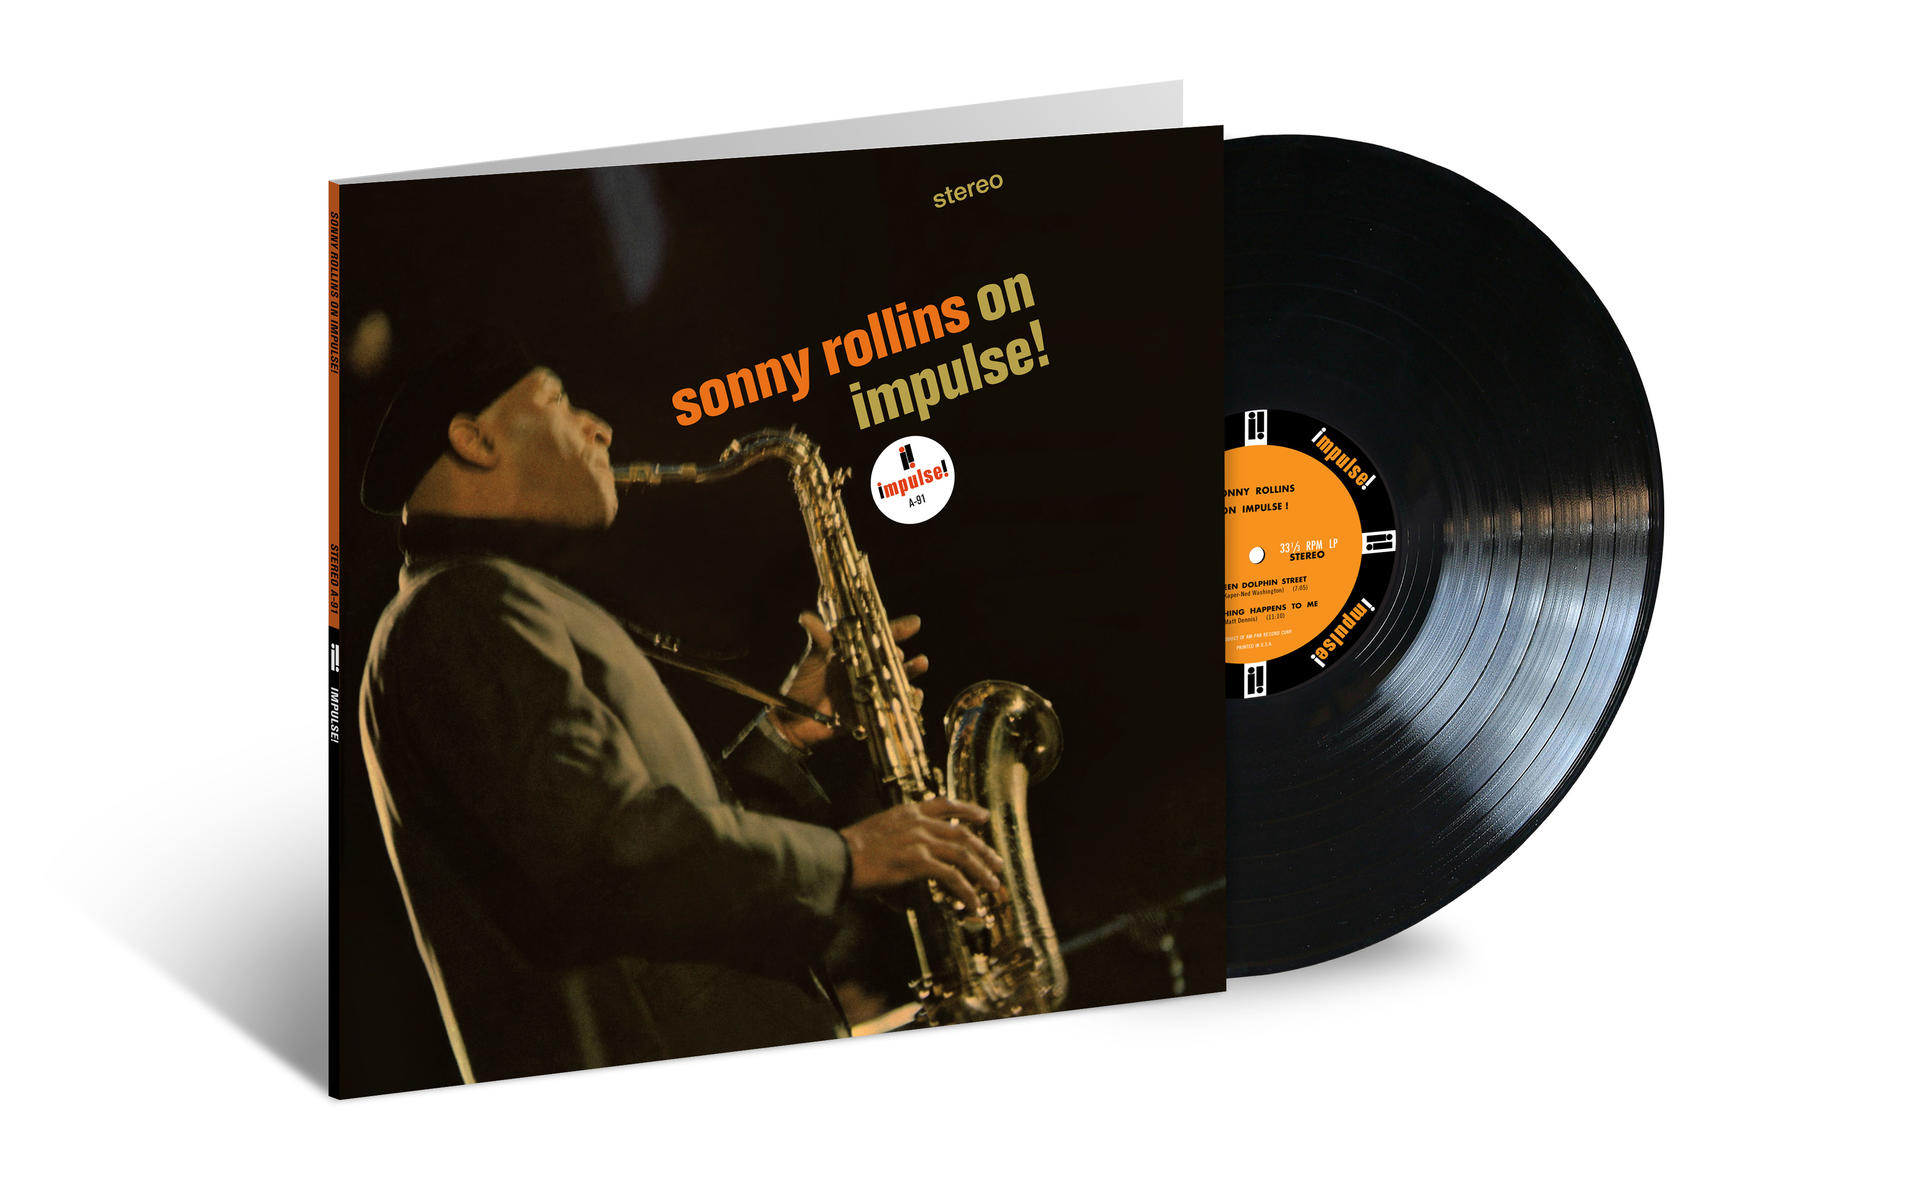 Sonny On Impulse! Rollins - Sounds) - (Vinyl) (Acoustic